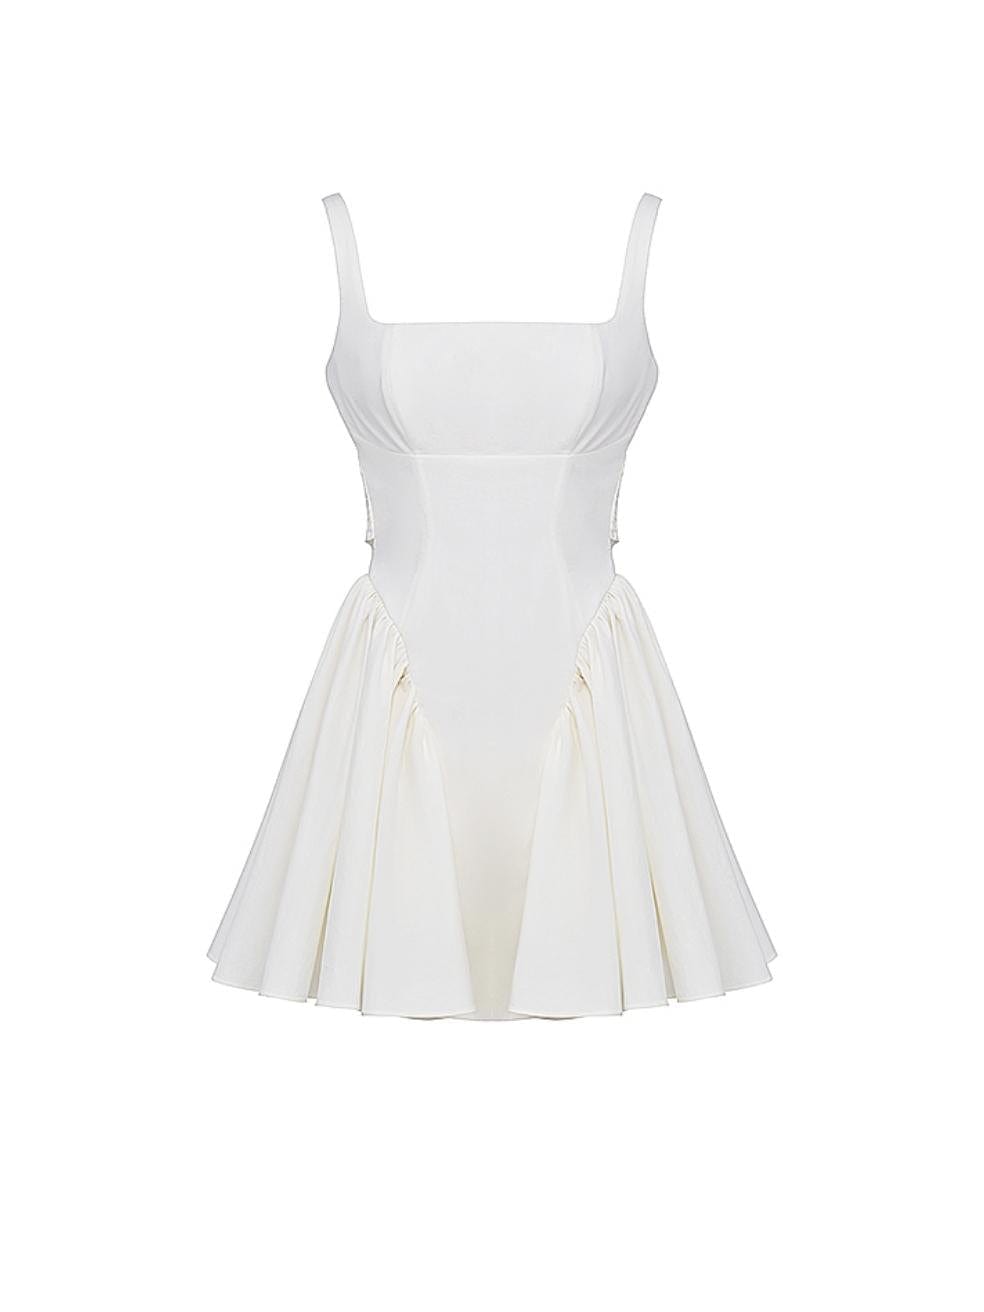 Florianne Dress in White